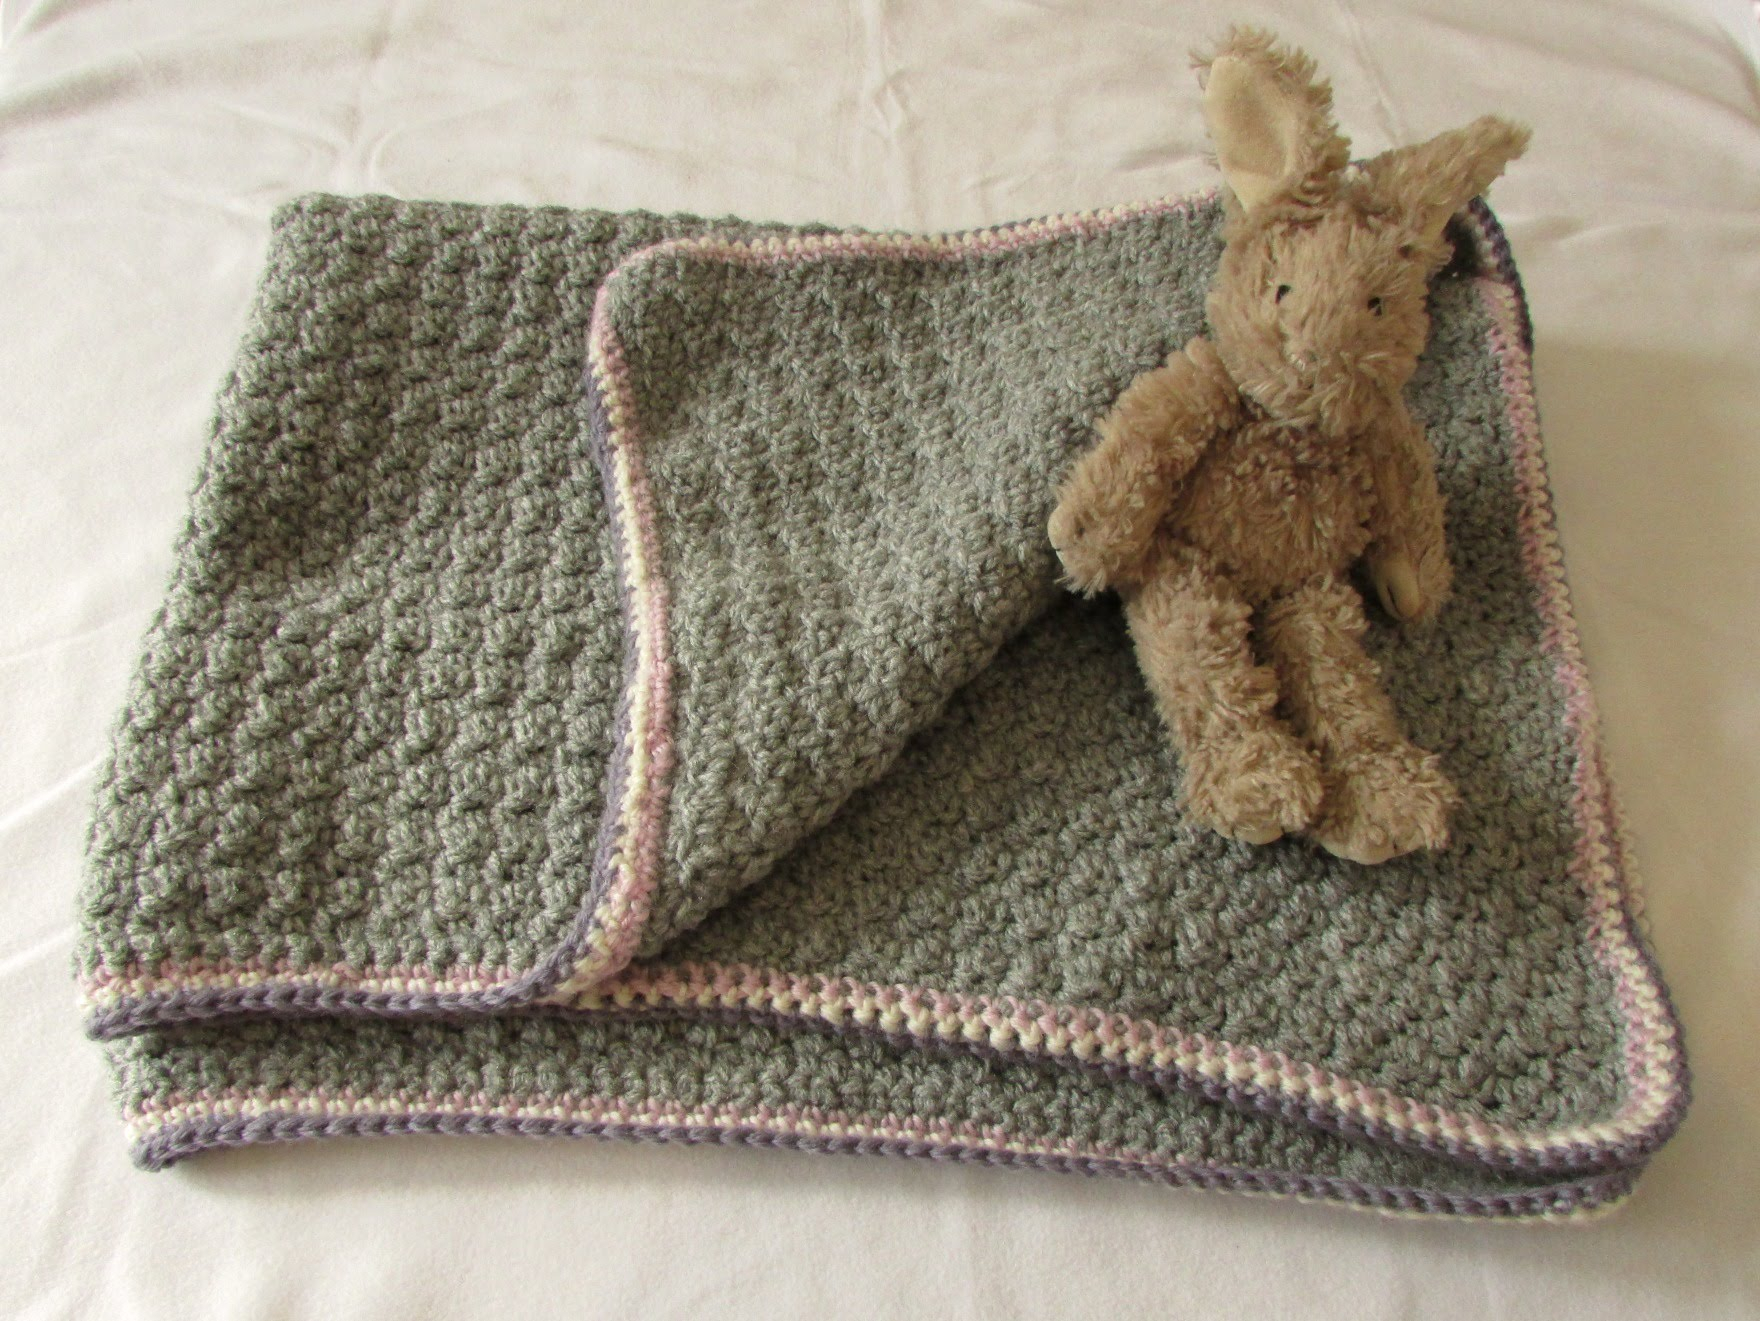 Simple Crochet Blanket Patterns Three Easy Crochet Ba Blanket Ideas Crochet And Knitting